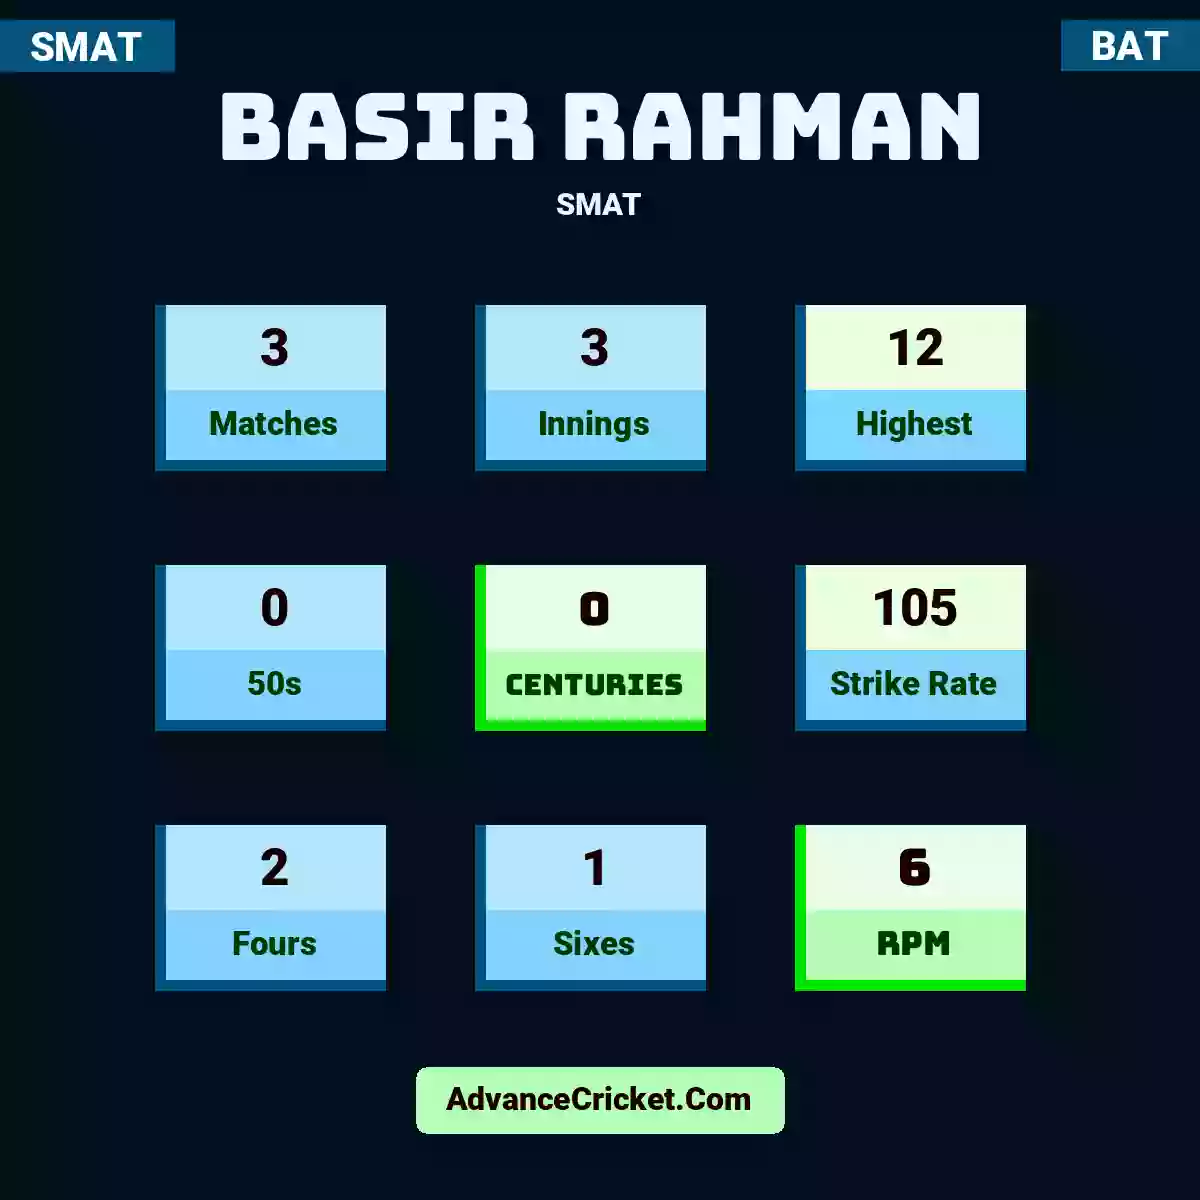 Basir Rahman SMAT , Basir Rahman played 3 matches, scored 12 runs as highest, 0 half-centuries, and 0 centuries, with a strike rate of 105. B.Rahman hit 2 fours and 1 sixes, with an RPM of 6.